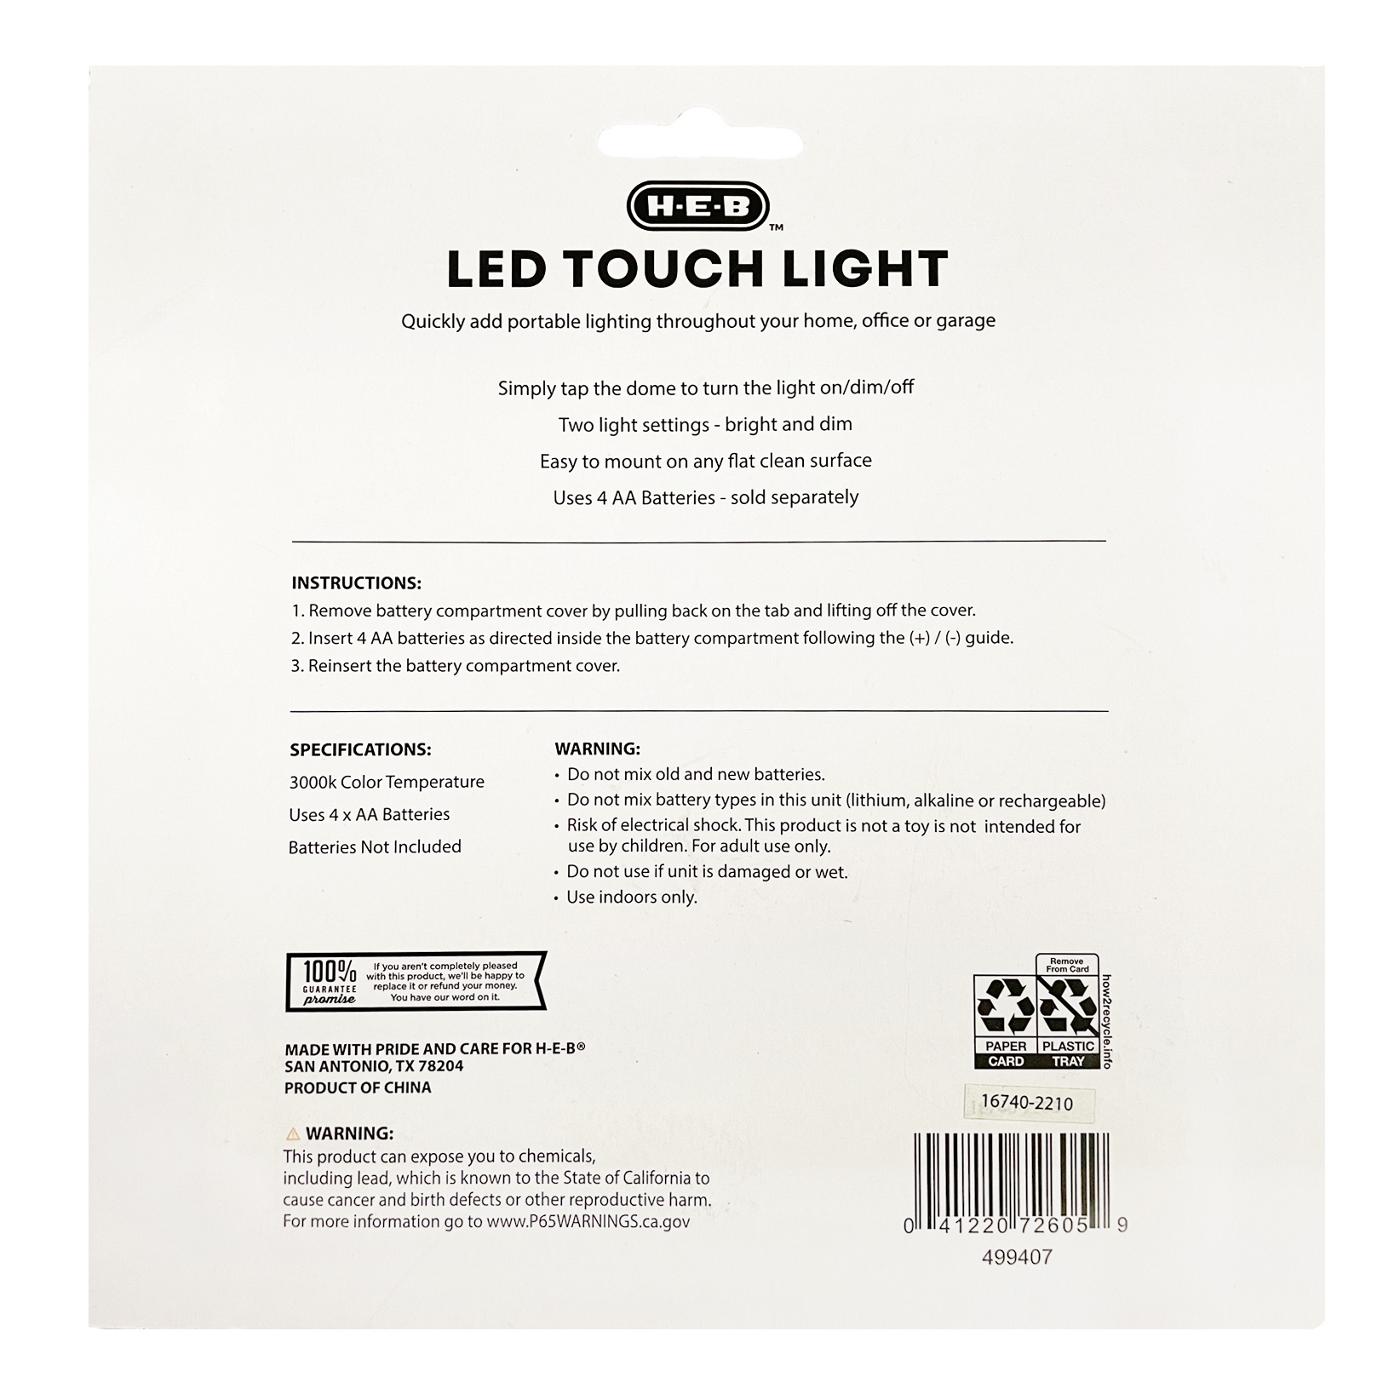 H-E-B LED Touch Light; image 2 of 2